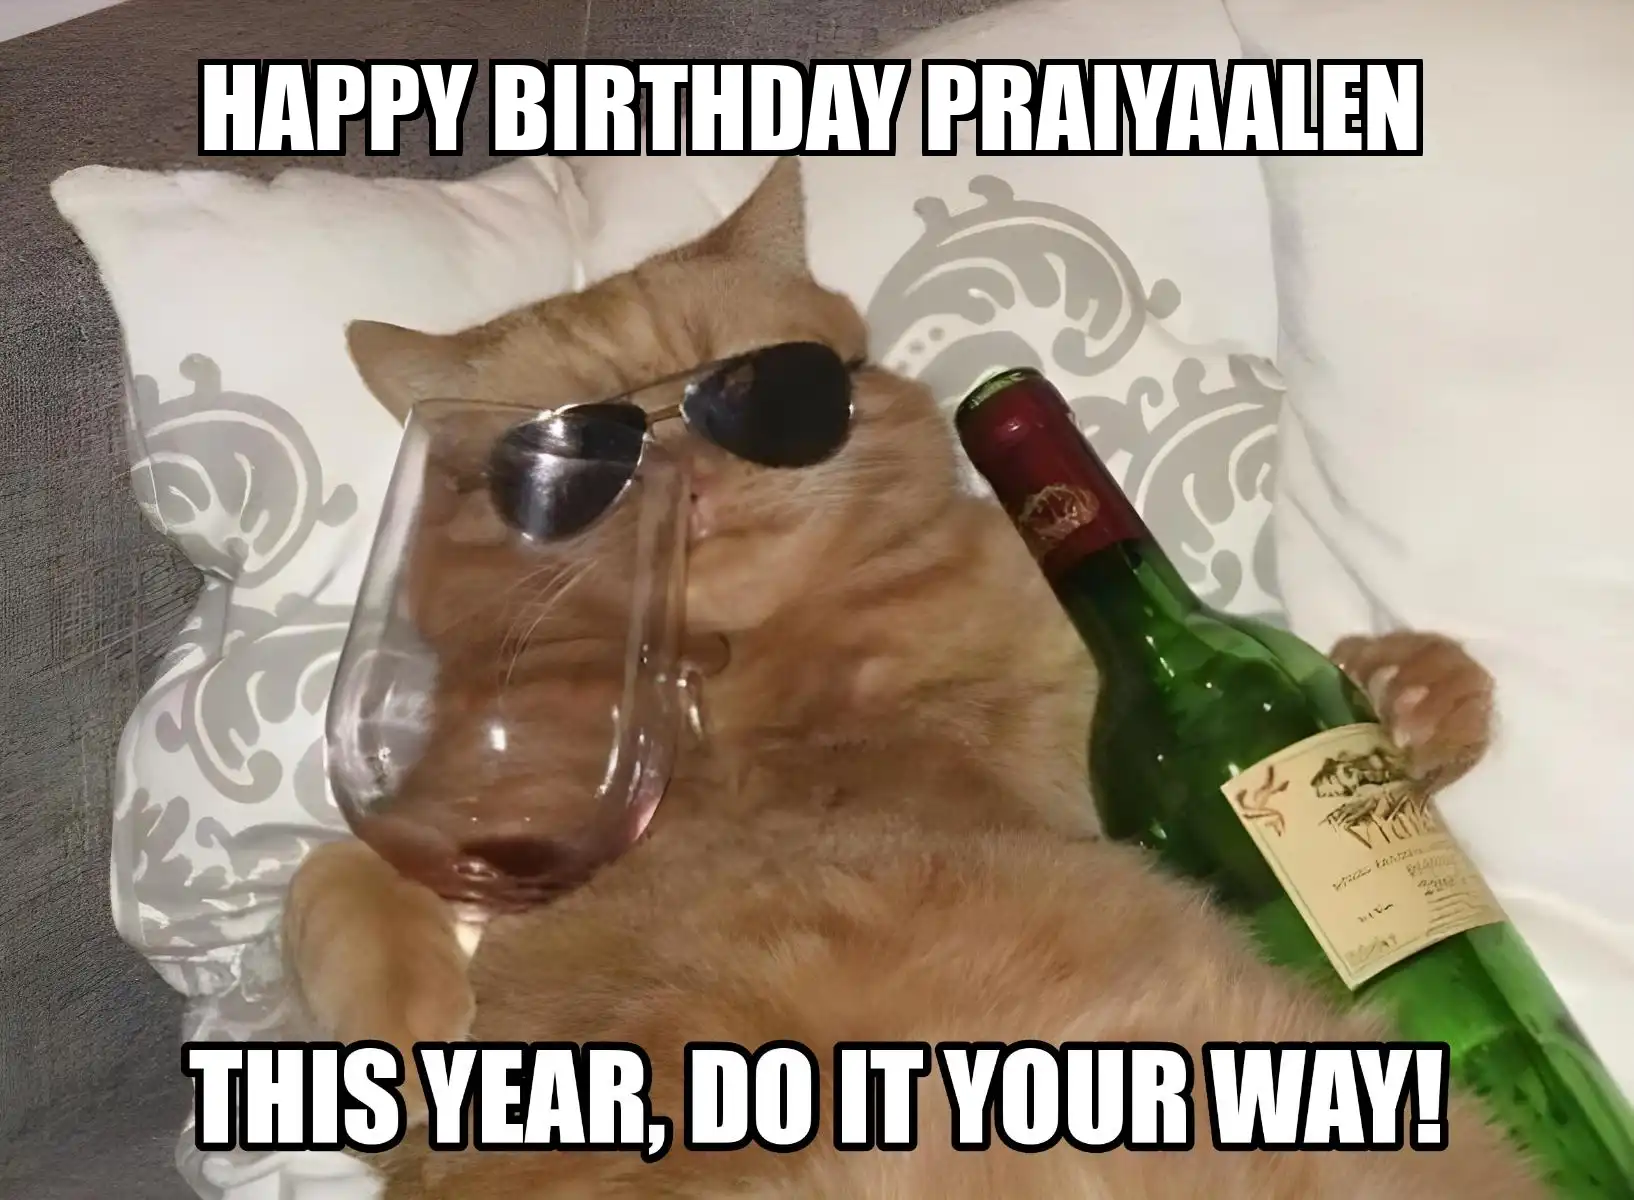 Happy Birthday Praiyaalen This Year Do It Your Way Meme